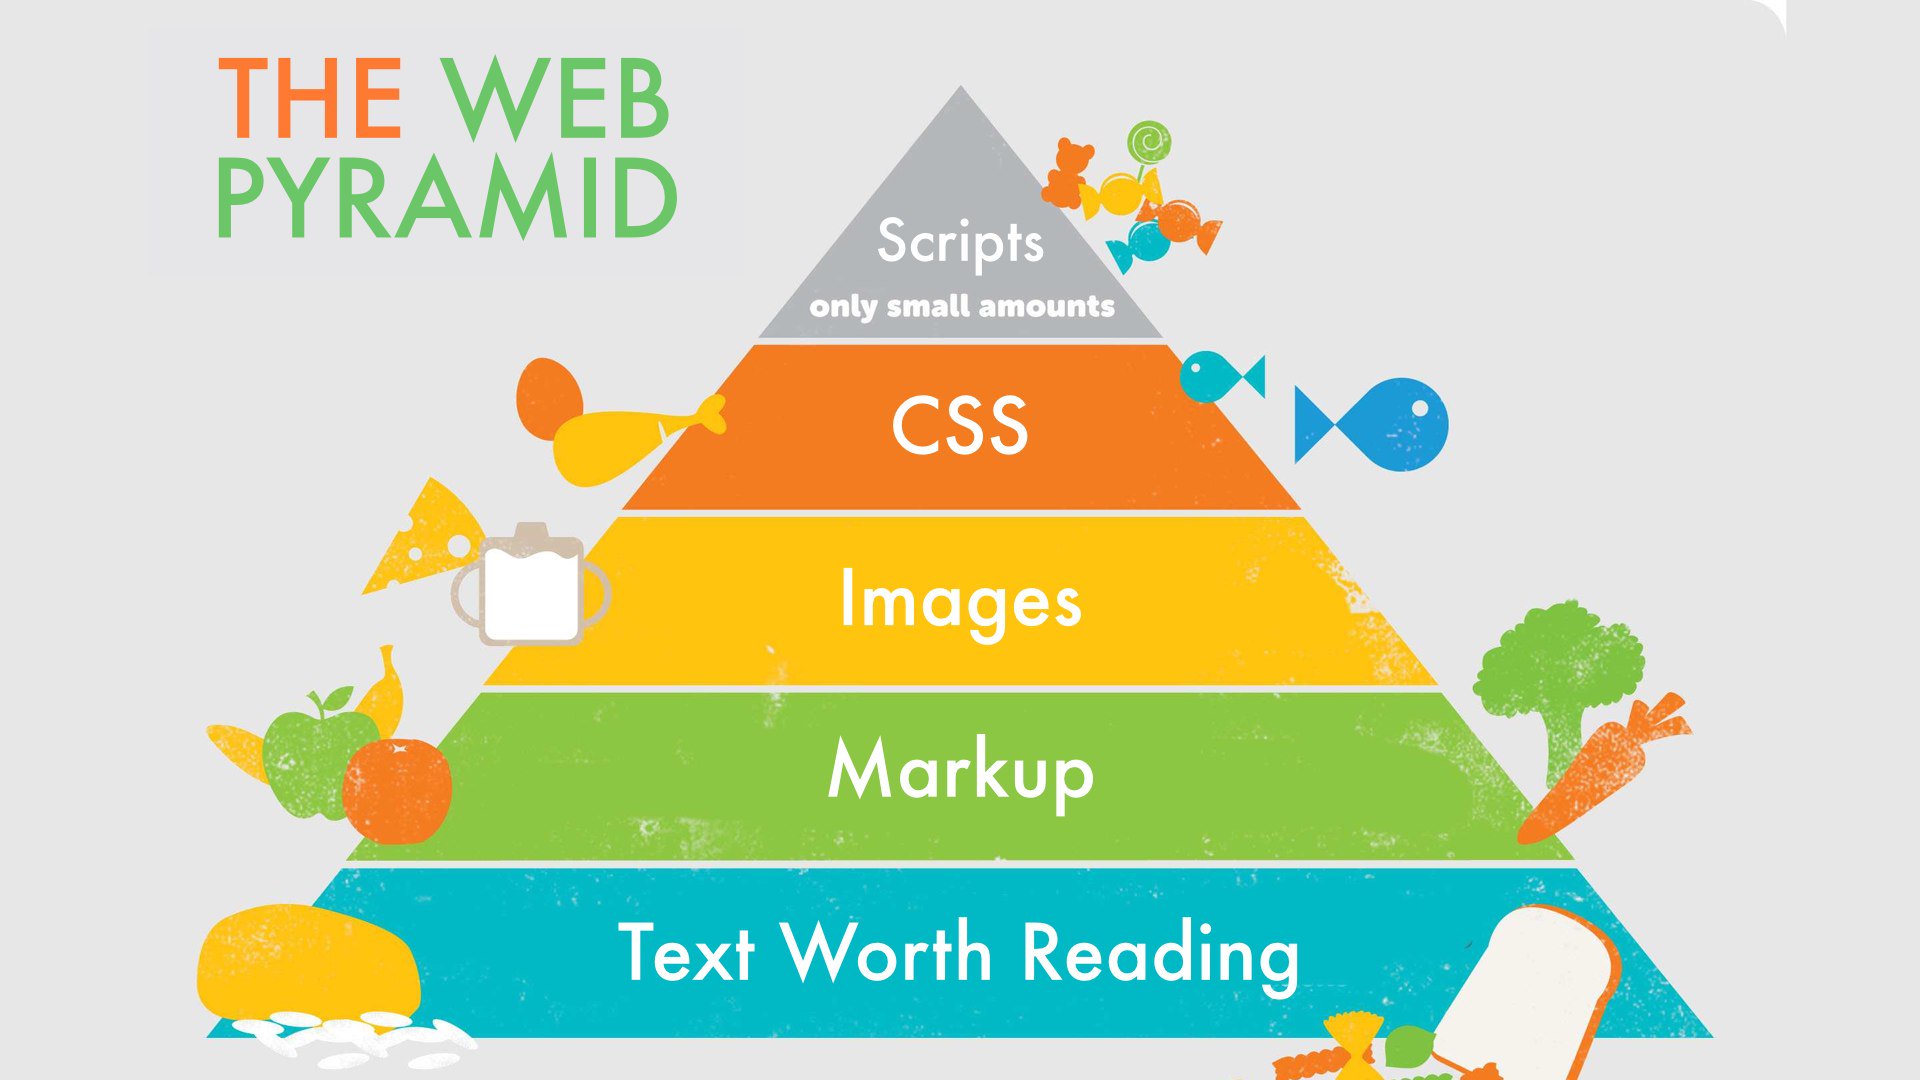 Web Pyramid via @pinboard on Twitter